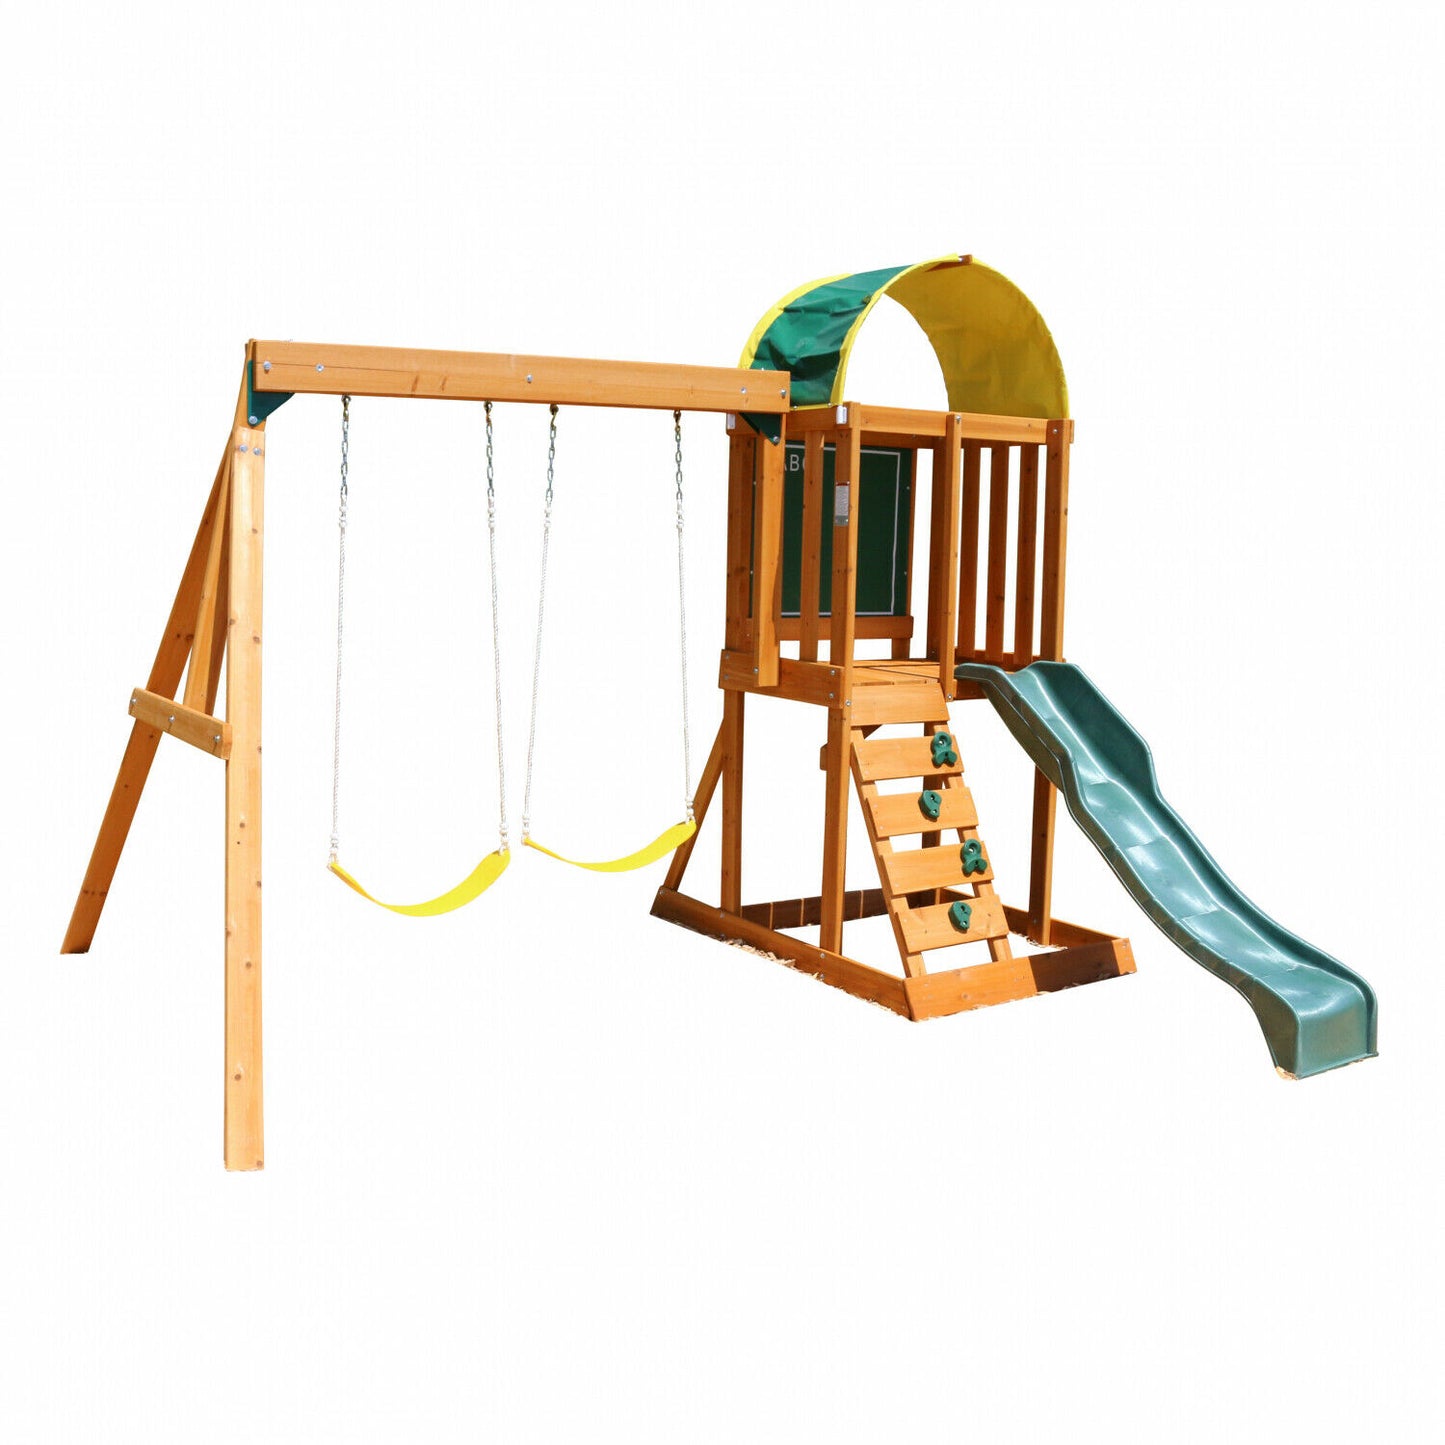 KidKraft Children's Wooden Swing Set - Kid's  Swing Set with Slide - Backyard Play with Sandbox